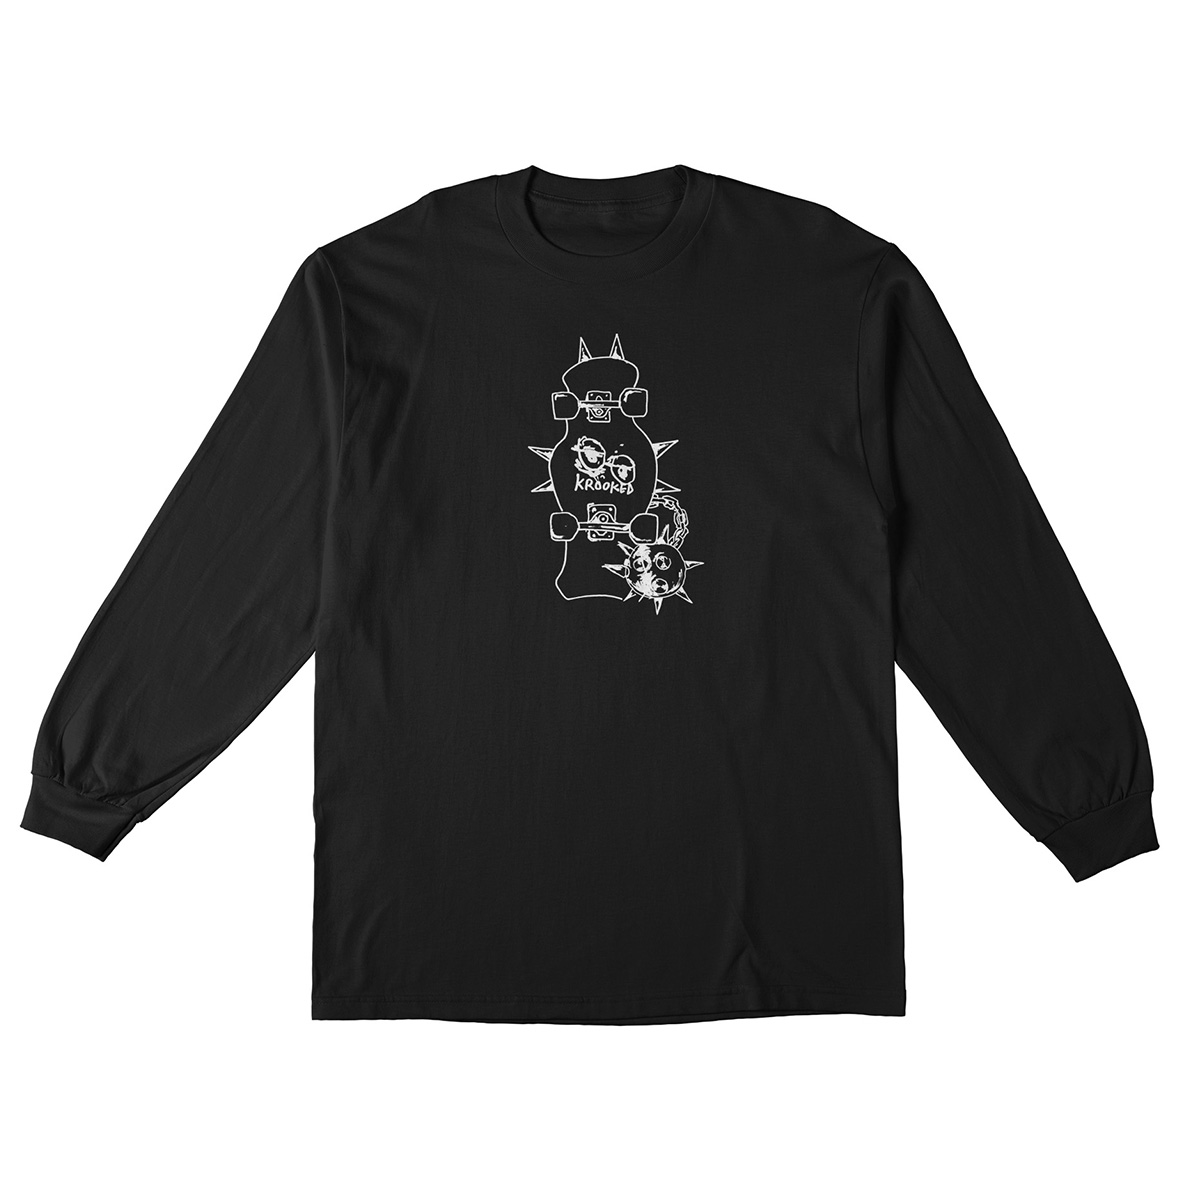 Krooked Mace Longsleeve T-Shirt Black/White